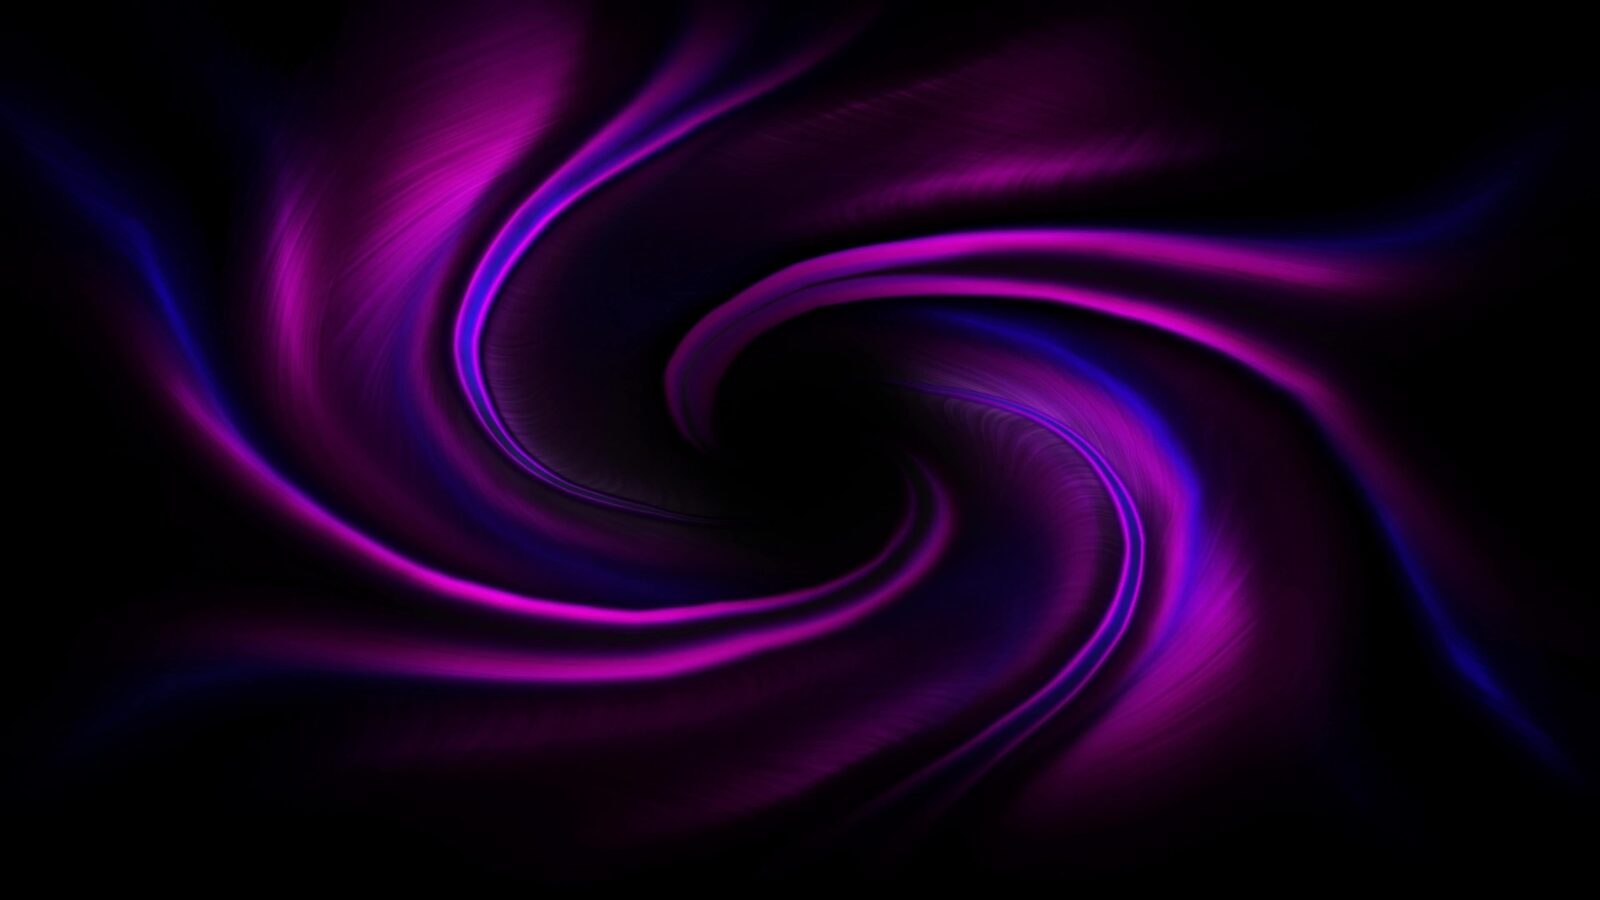 Abstract Purple Swirl 4K Artwork - Free Live Wallpaper - Live Desktop Wallpapers